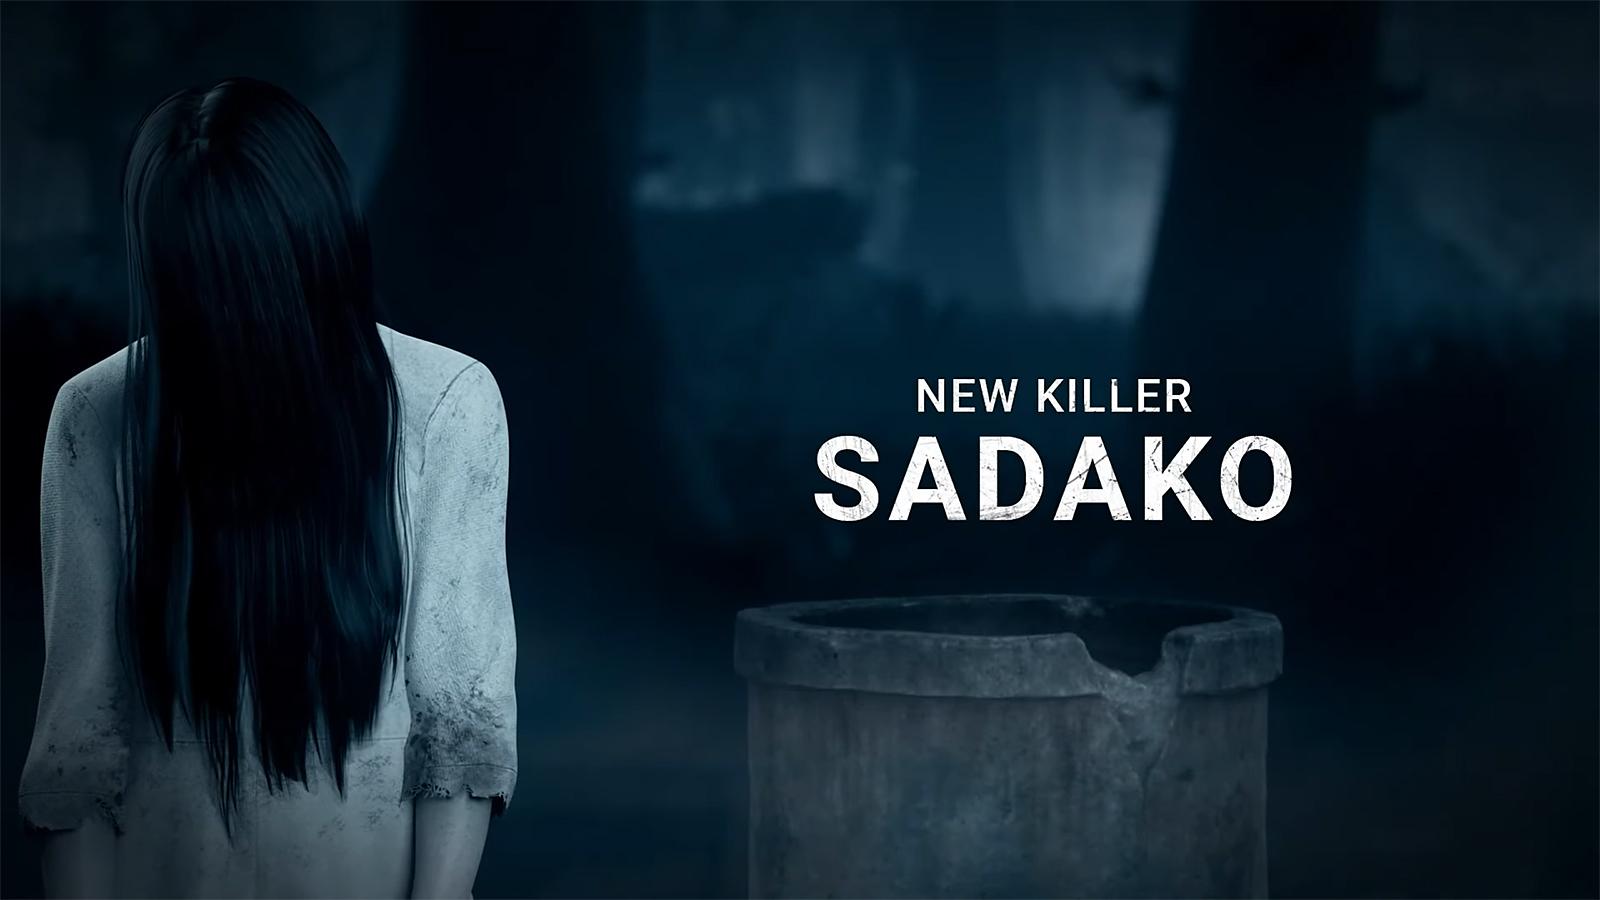 Sadako, the newest Killer in Dead by Daylight